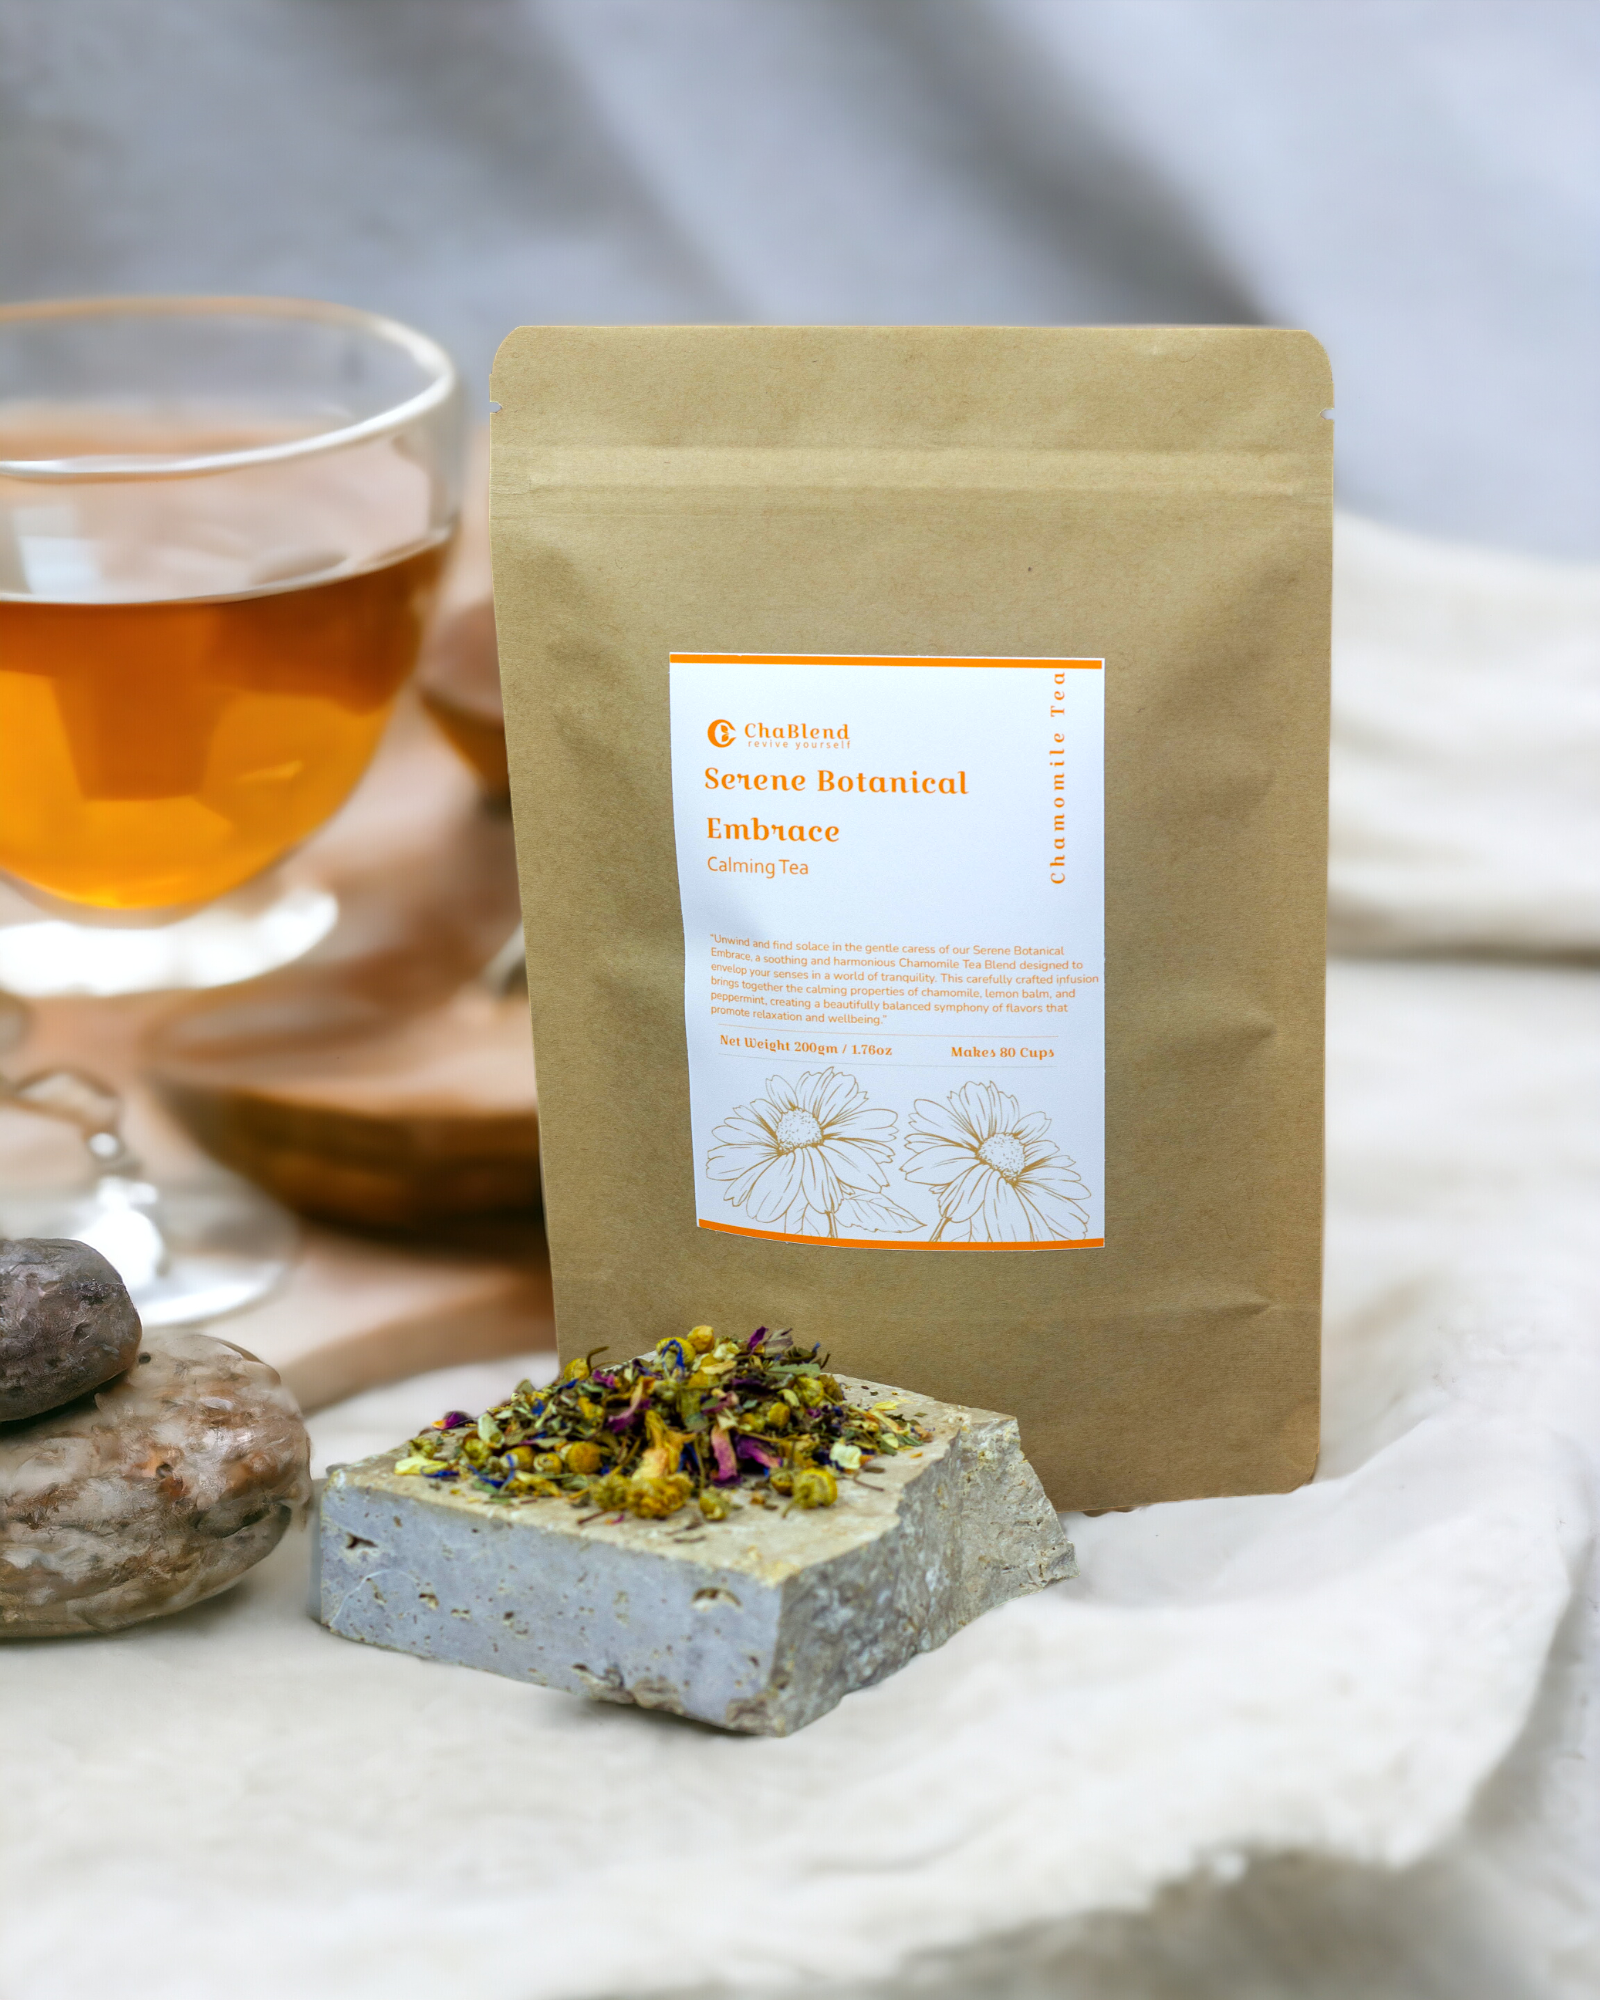 Serene Botanical Embrace - Calming Tea